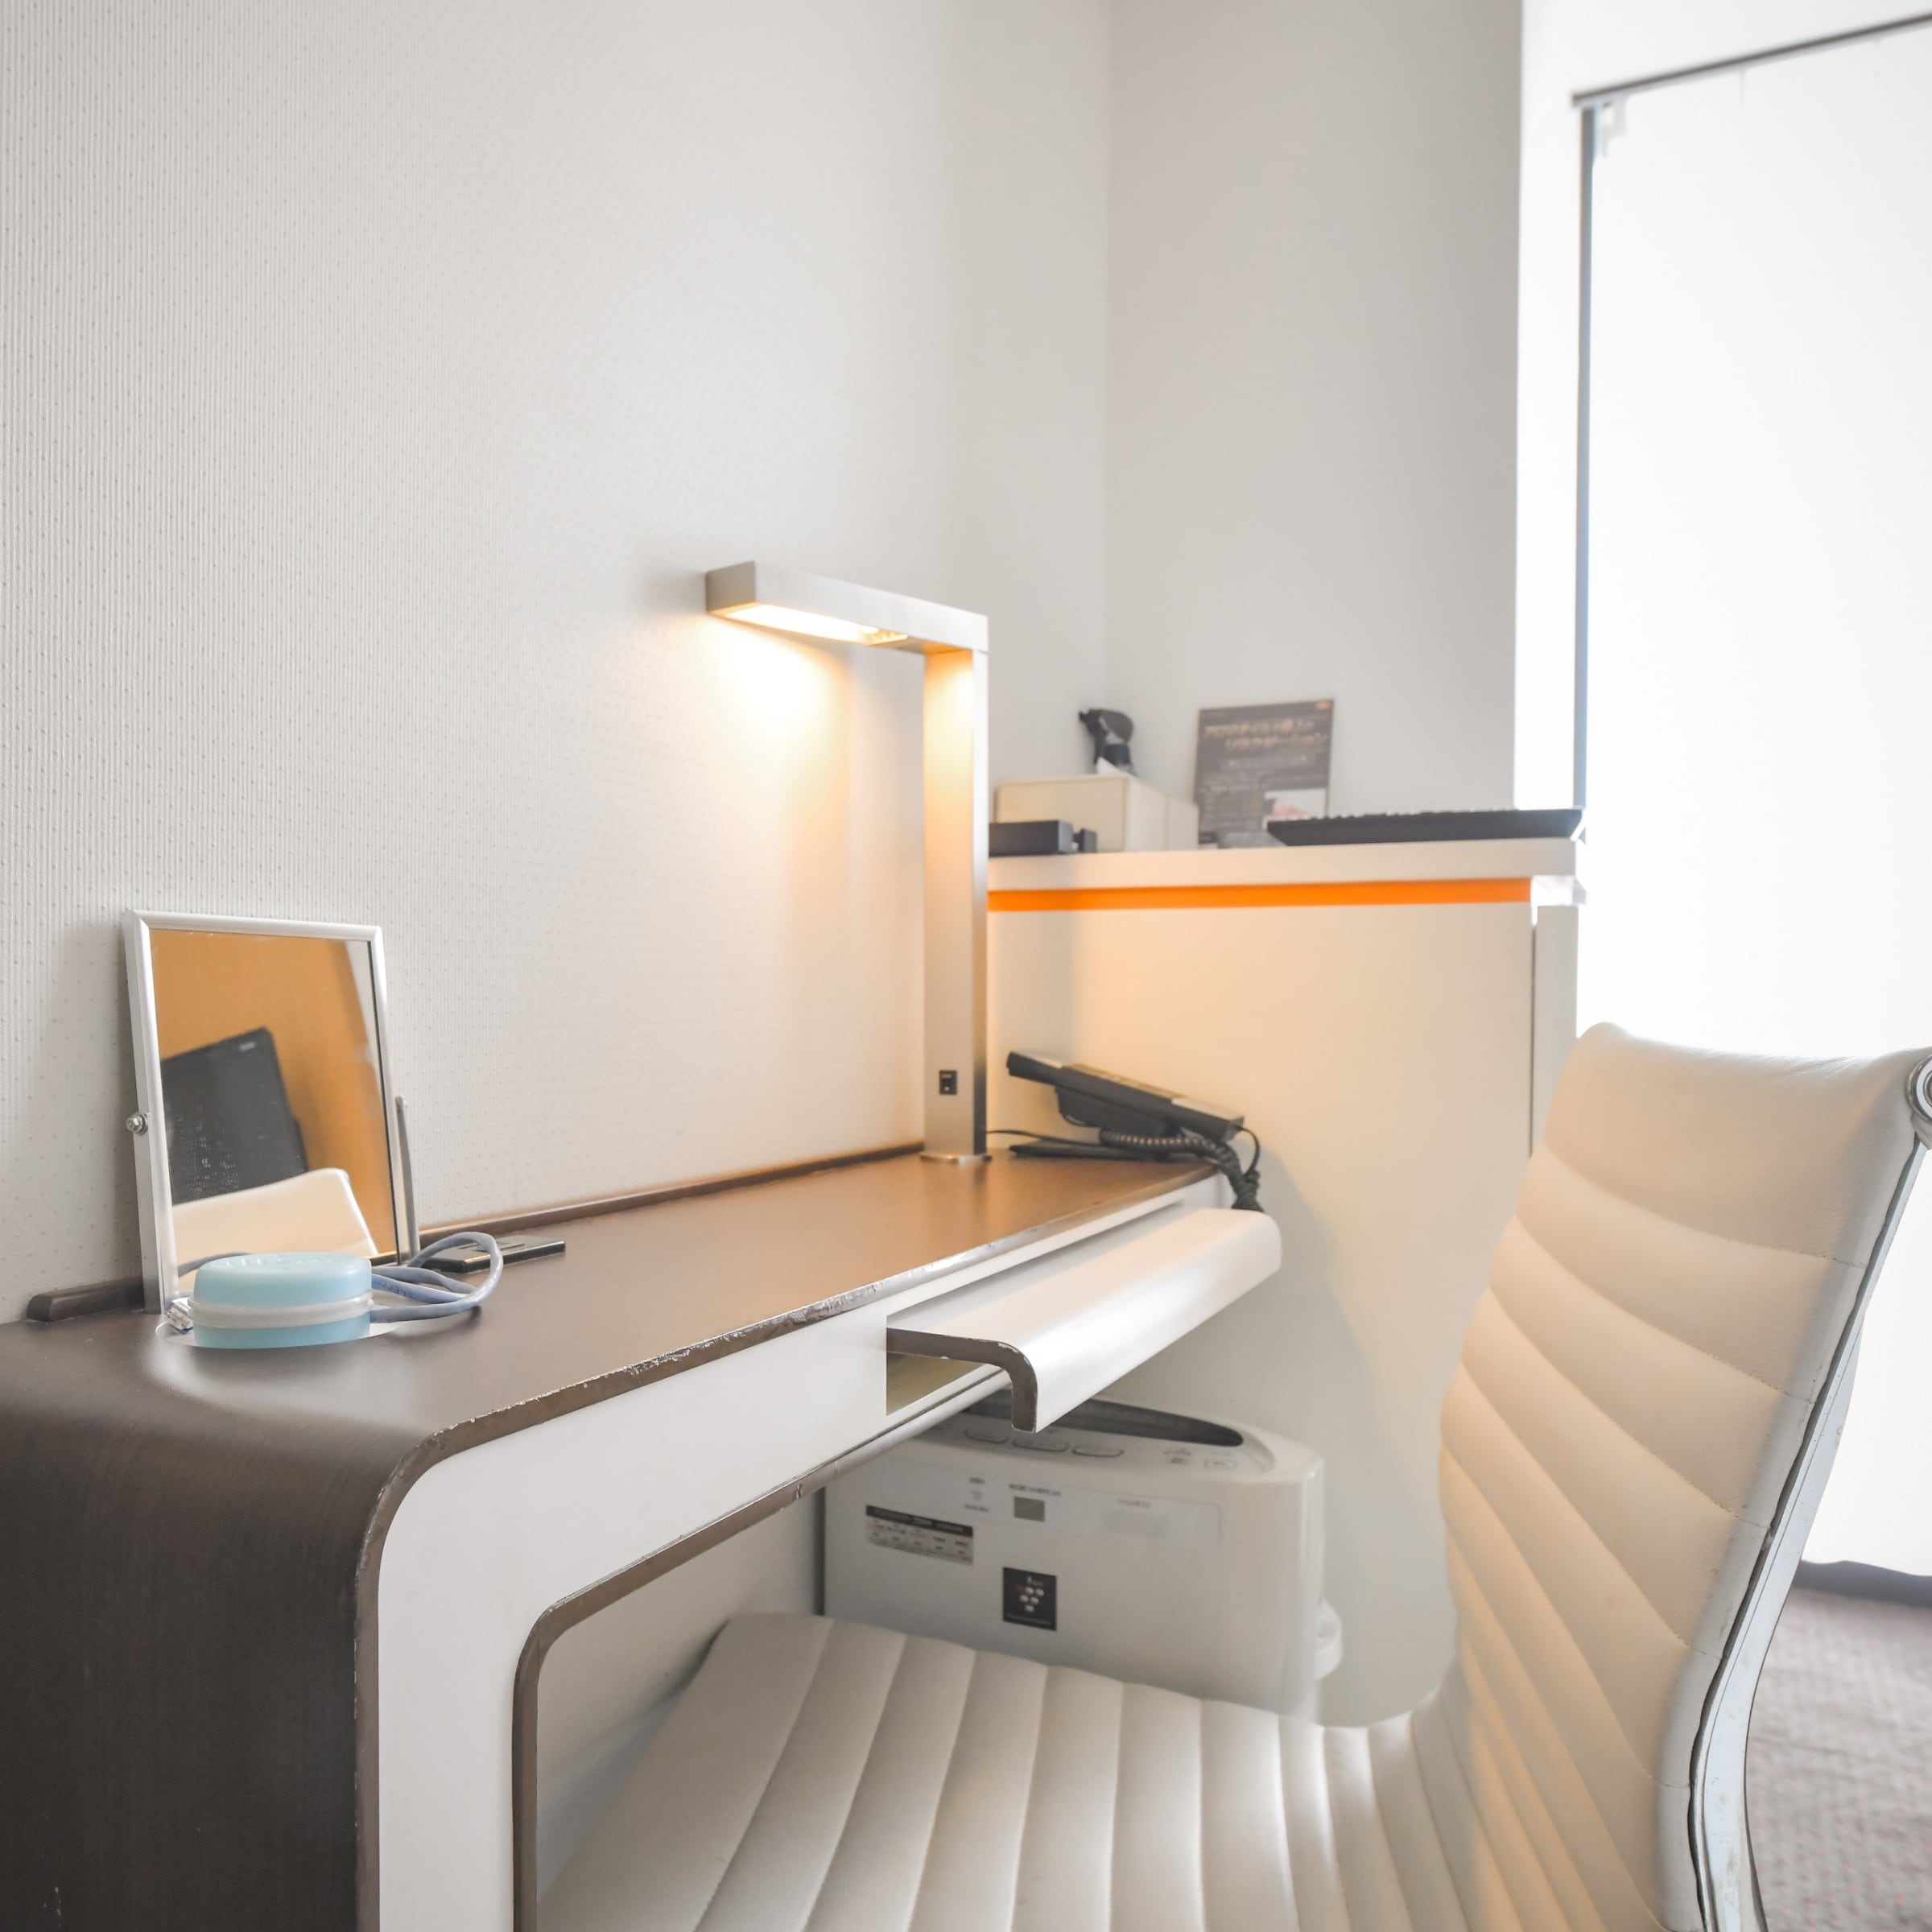 Standard floor: Desk with stand light